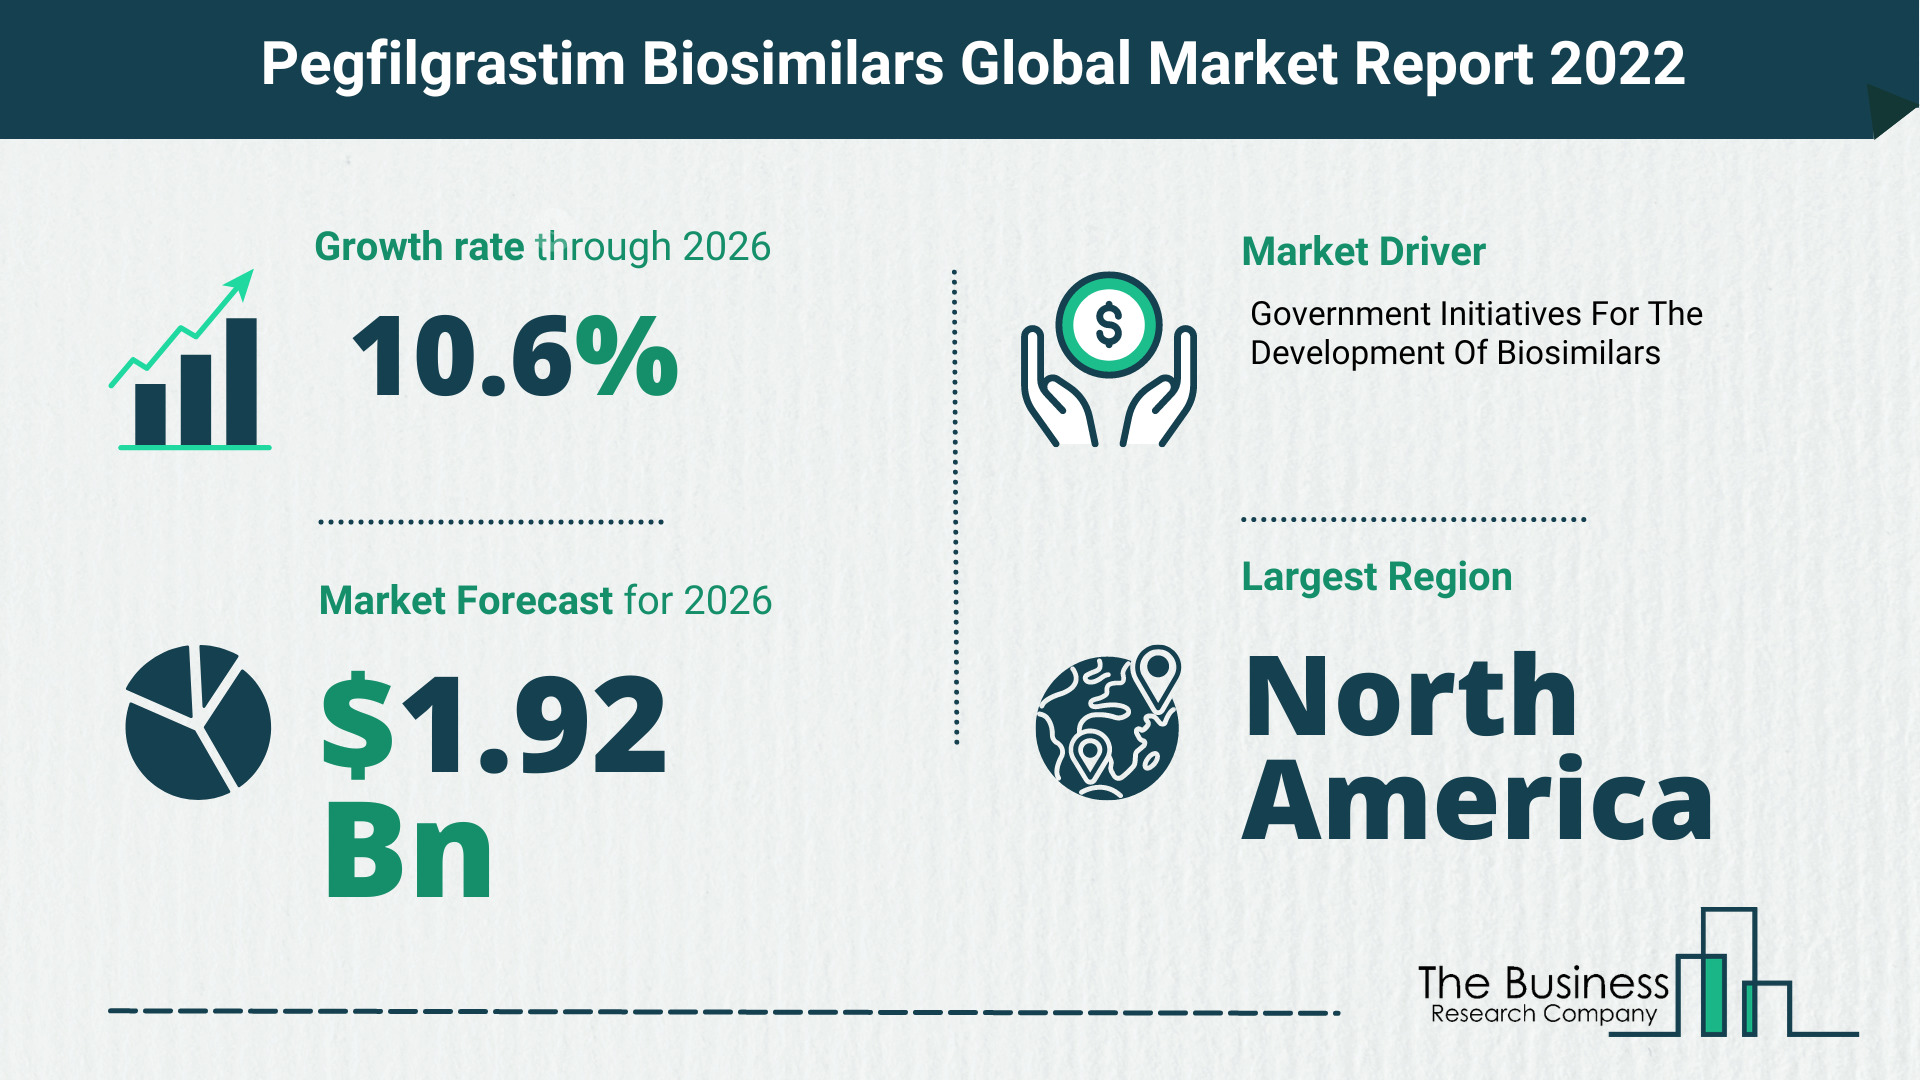 Global Pegfilgrastim Biosimilars Market Size